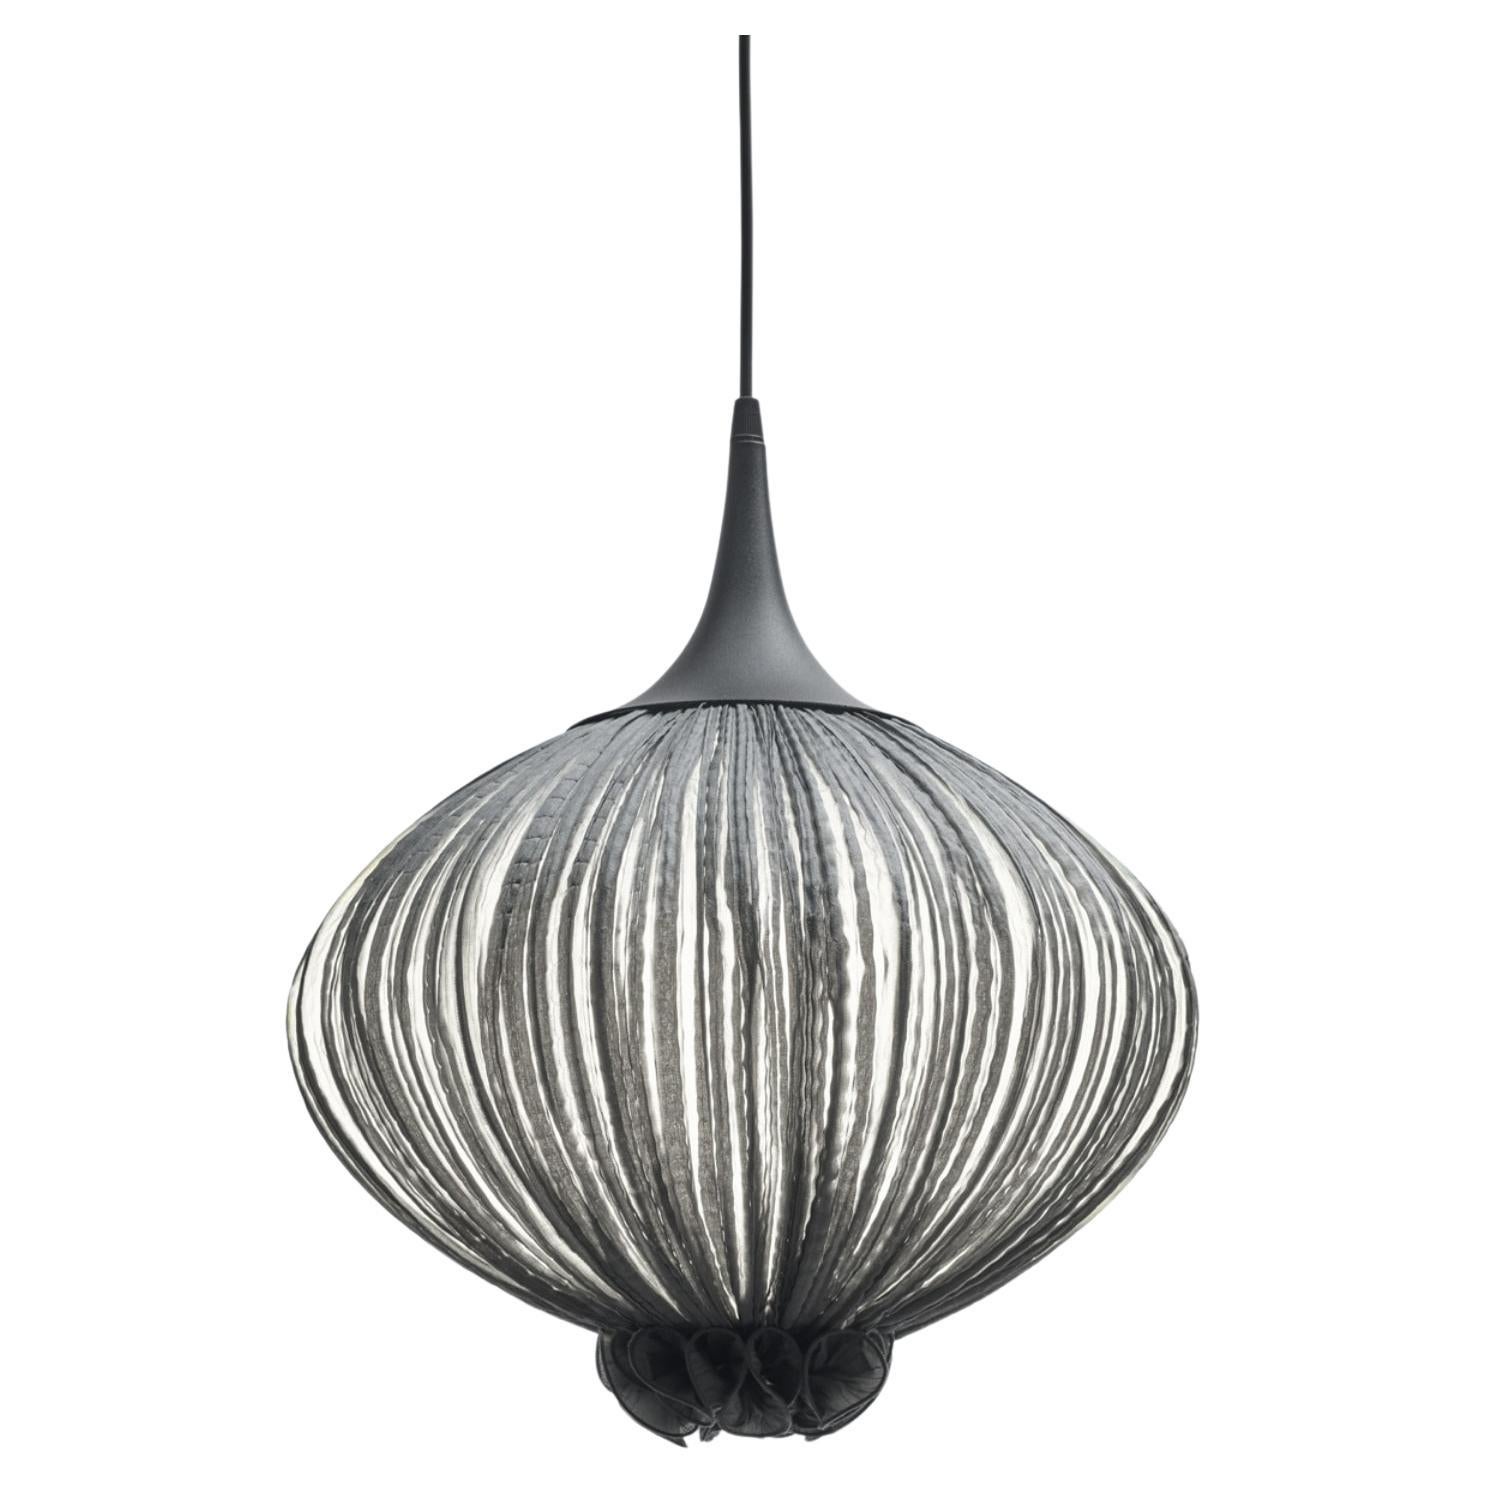 Silk over Metal "Suuria Son" Pendant Lamp by Aqua Creations For Sale